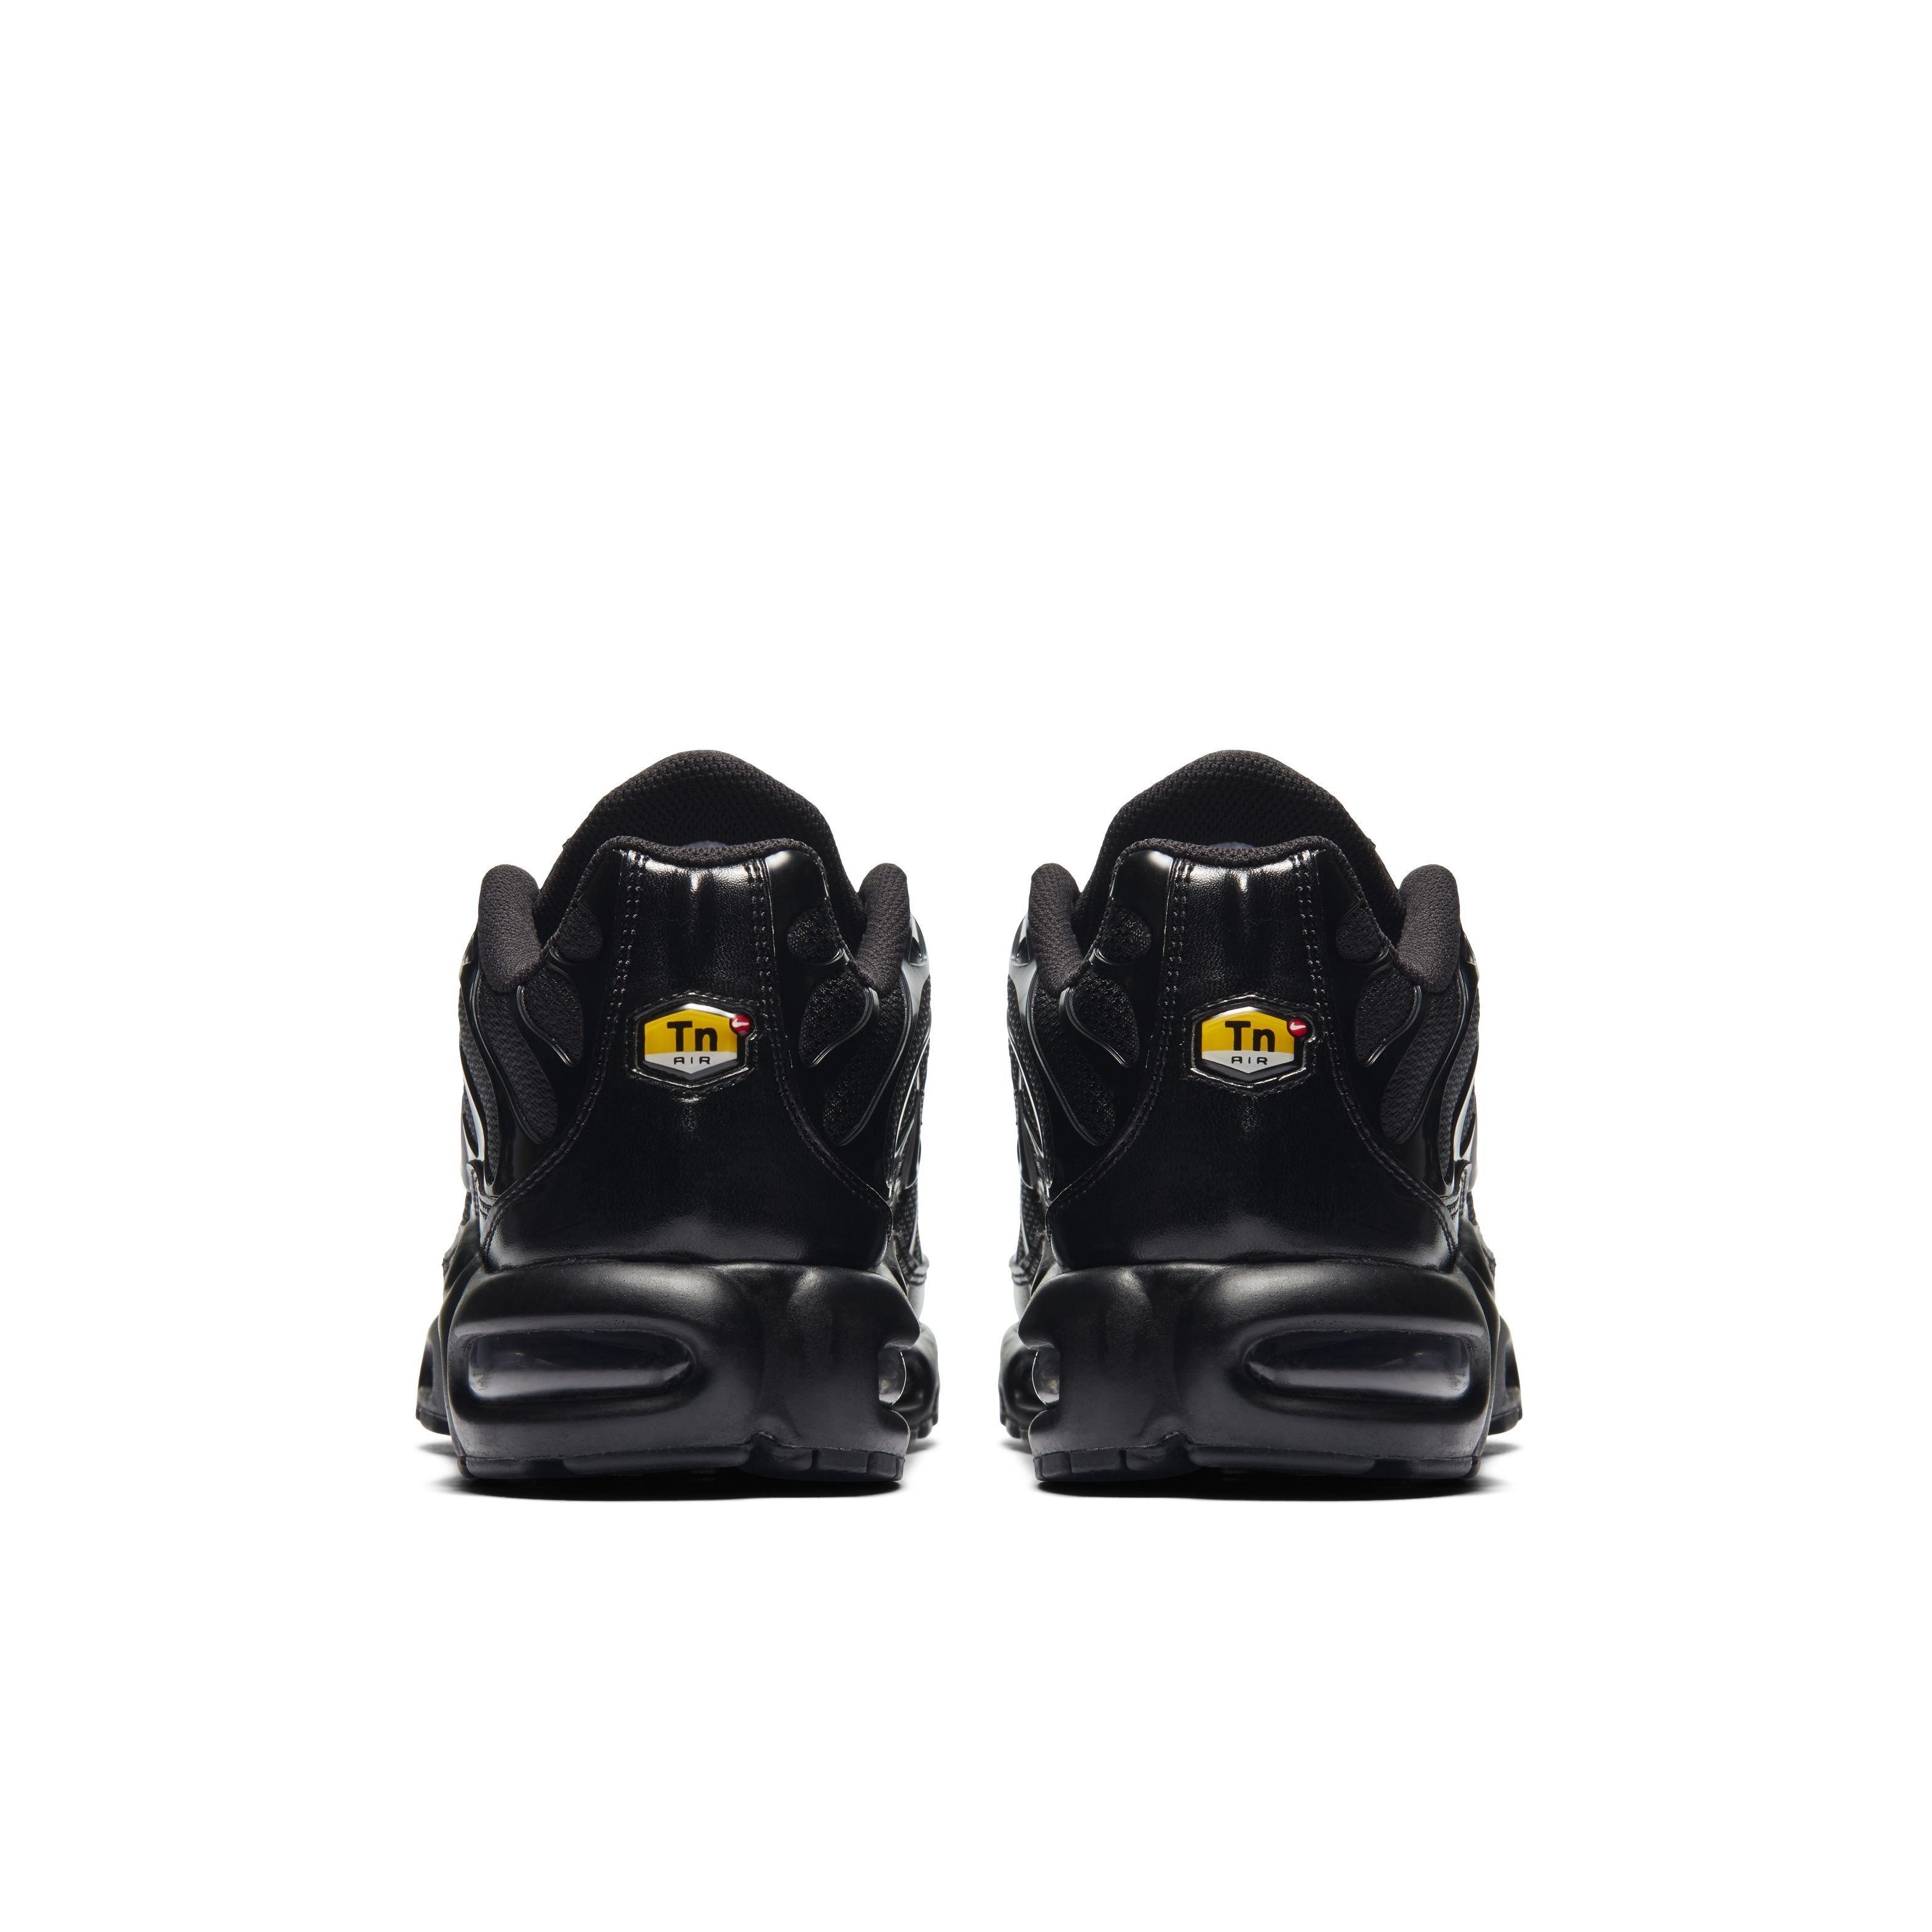 Nike Max Plus "Black/Black/Black"